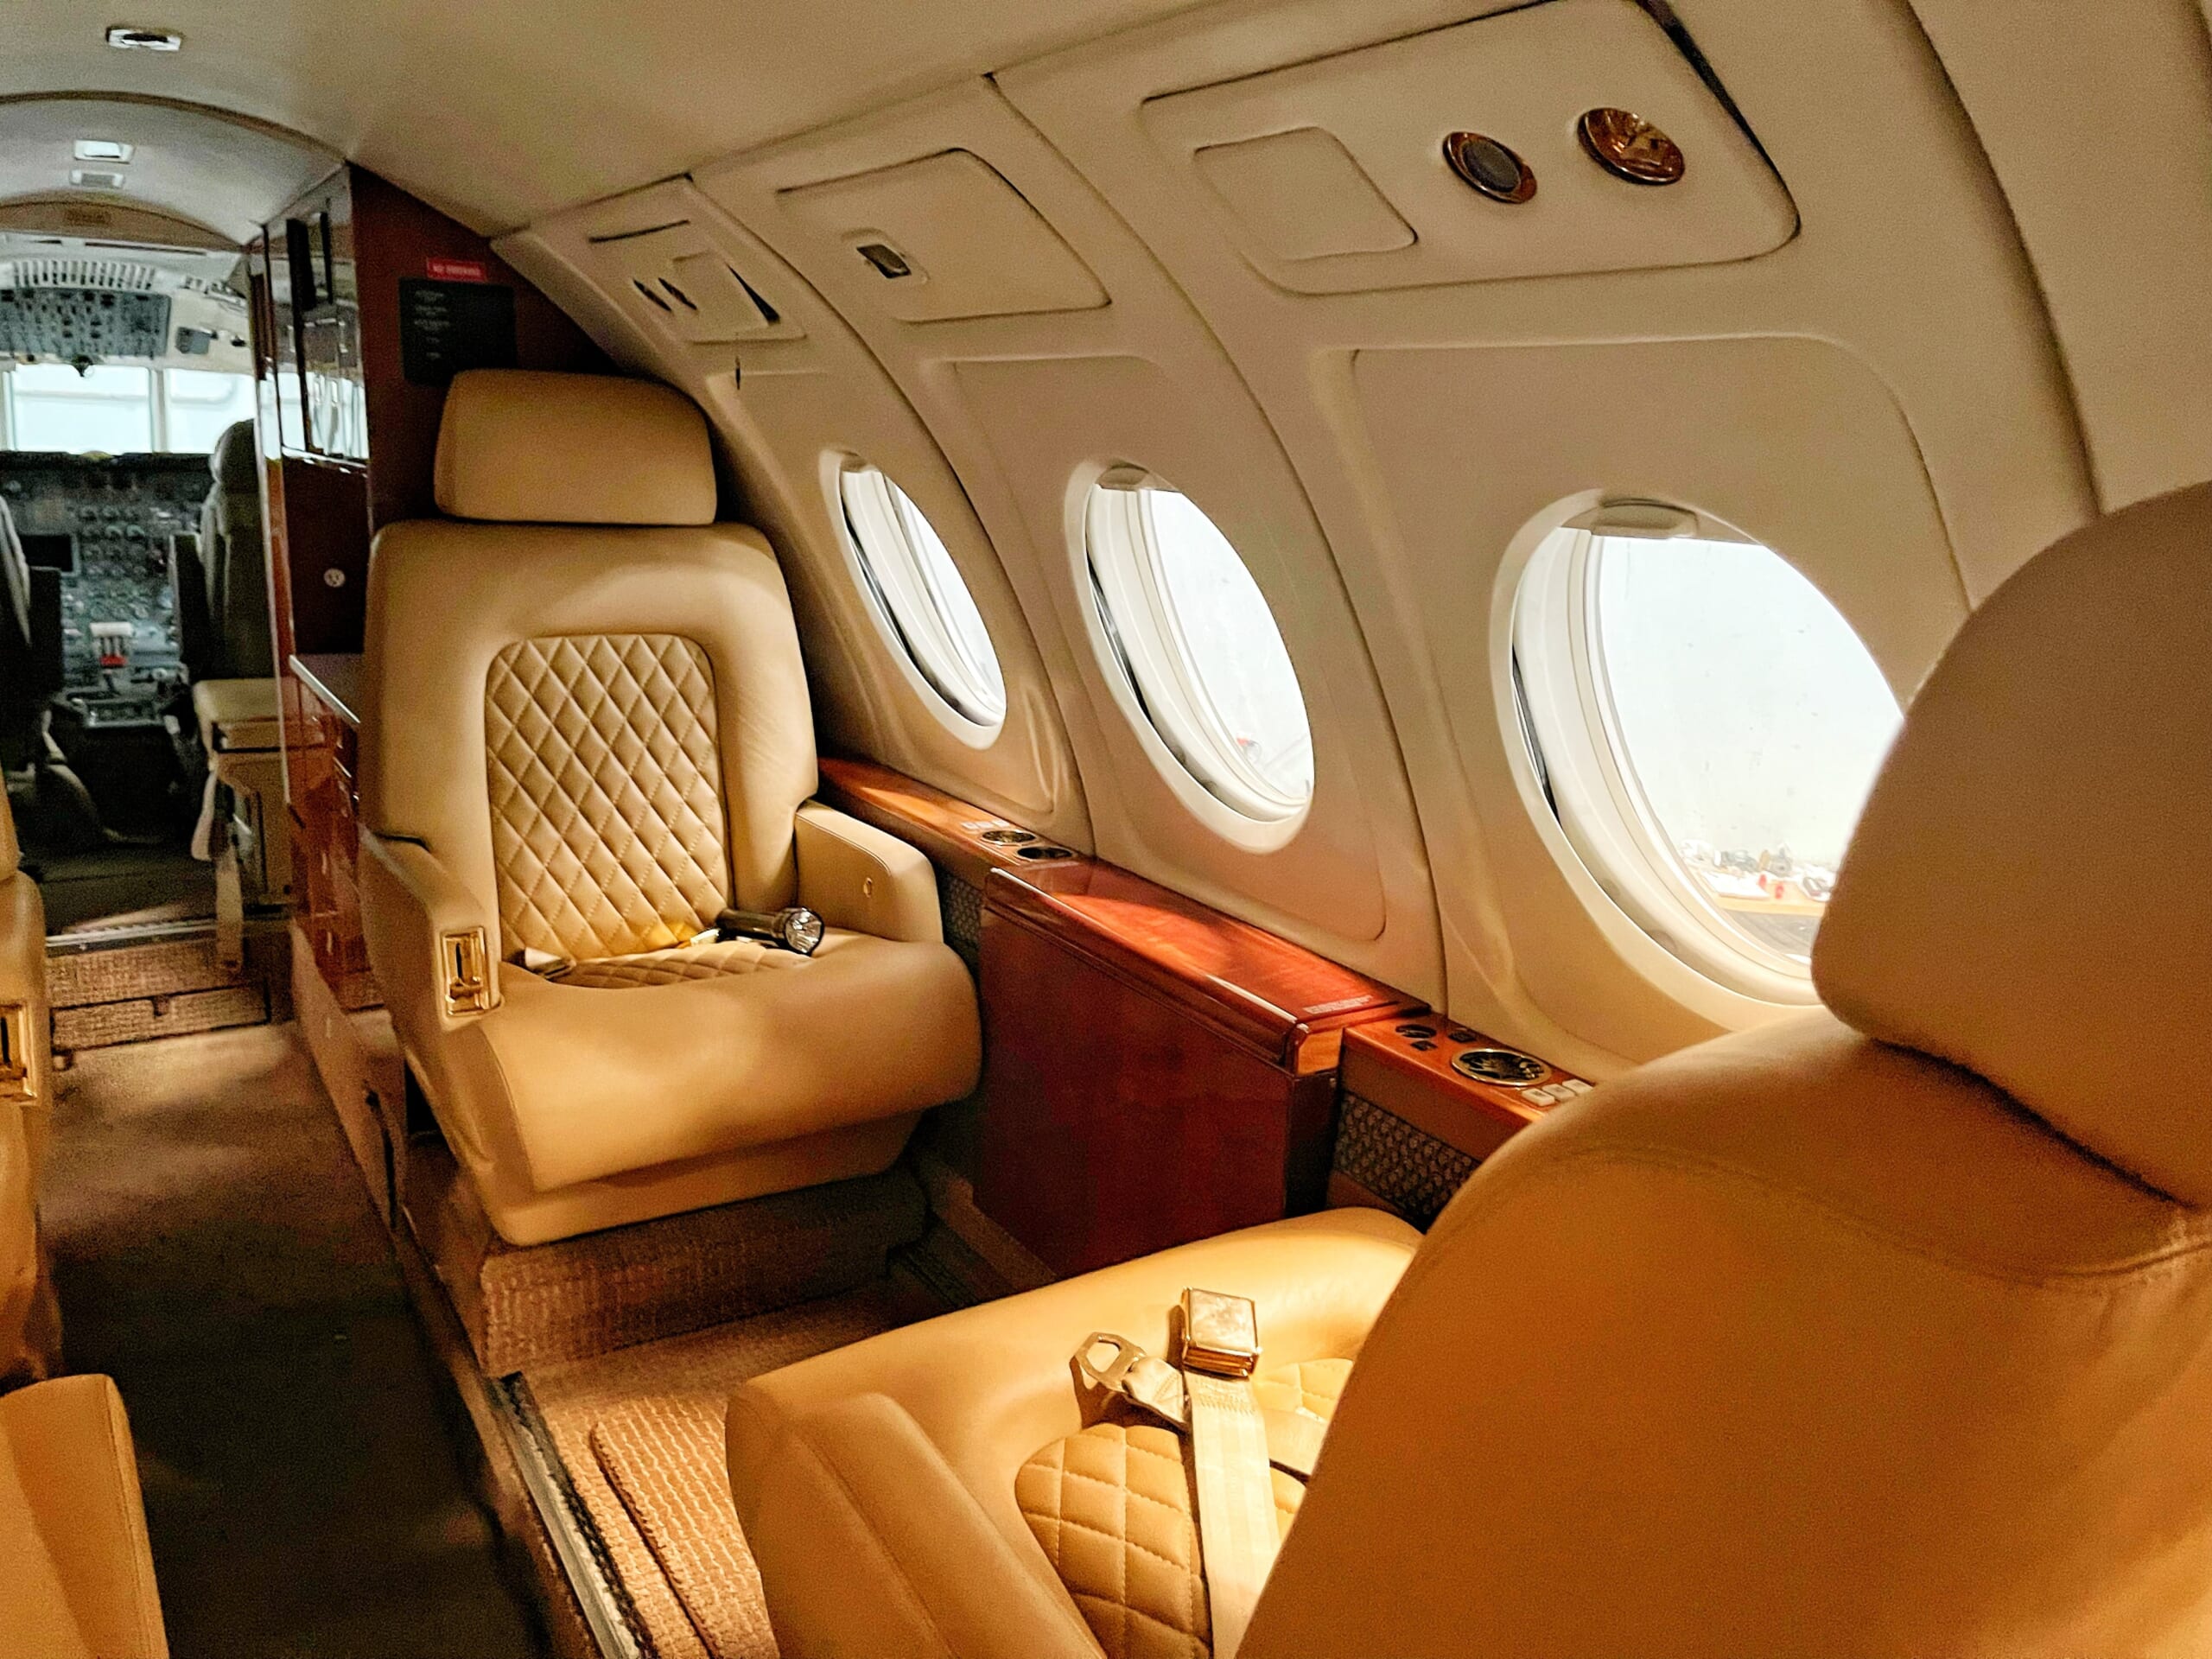 Interior of private jet